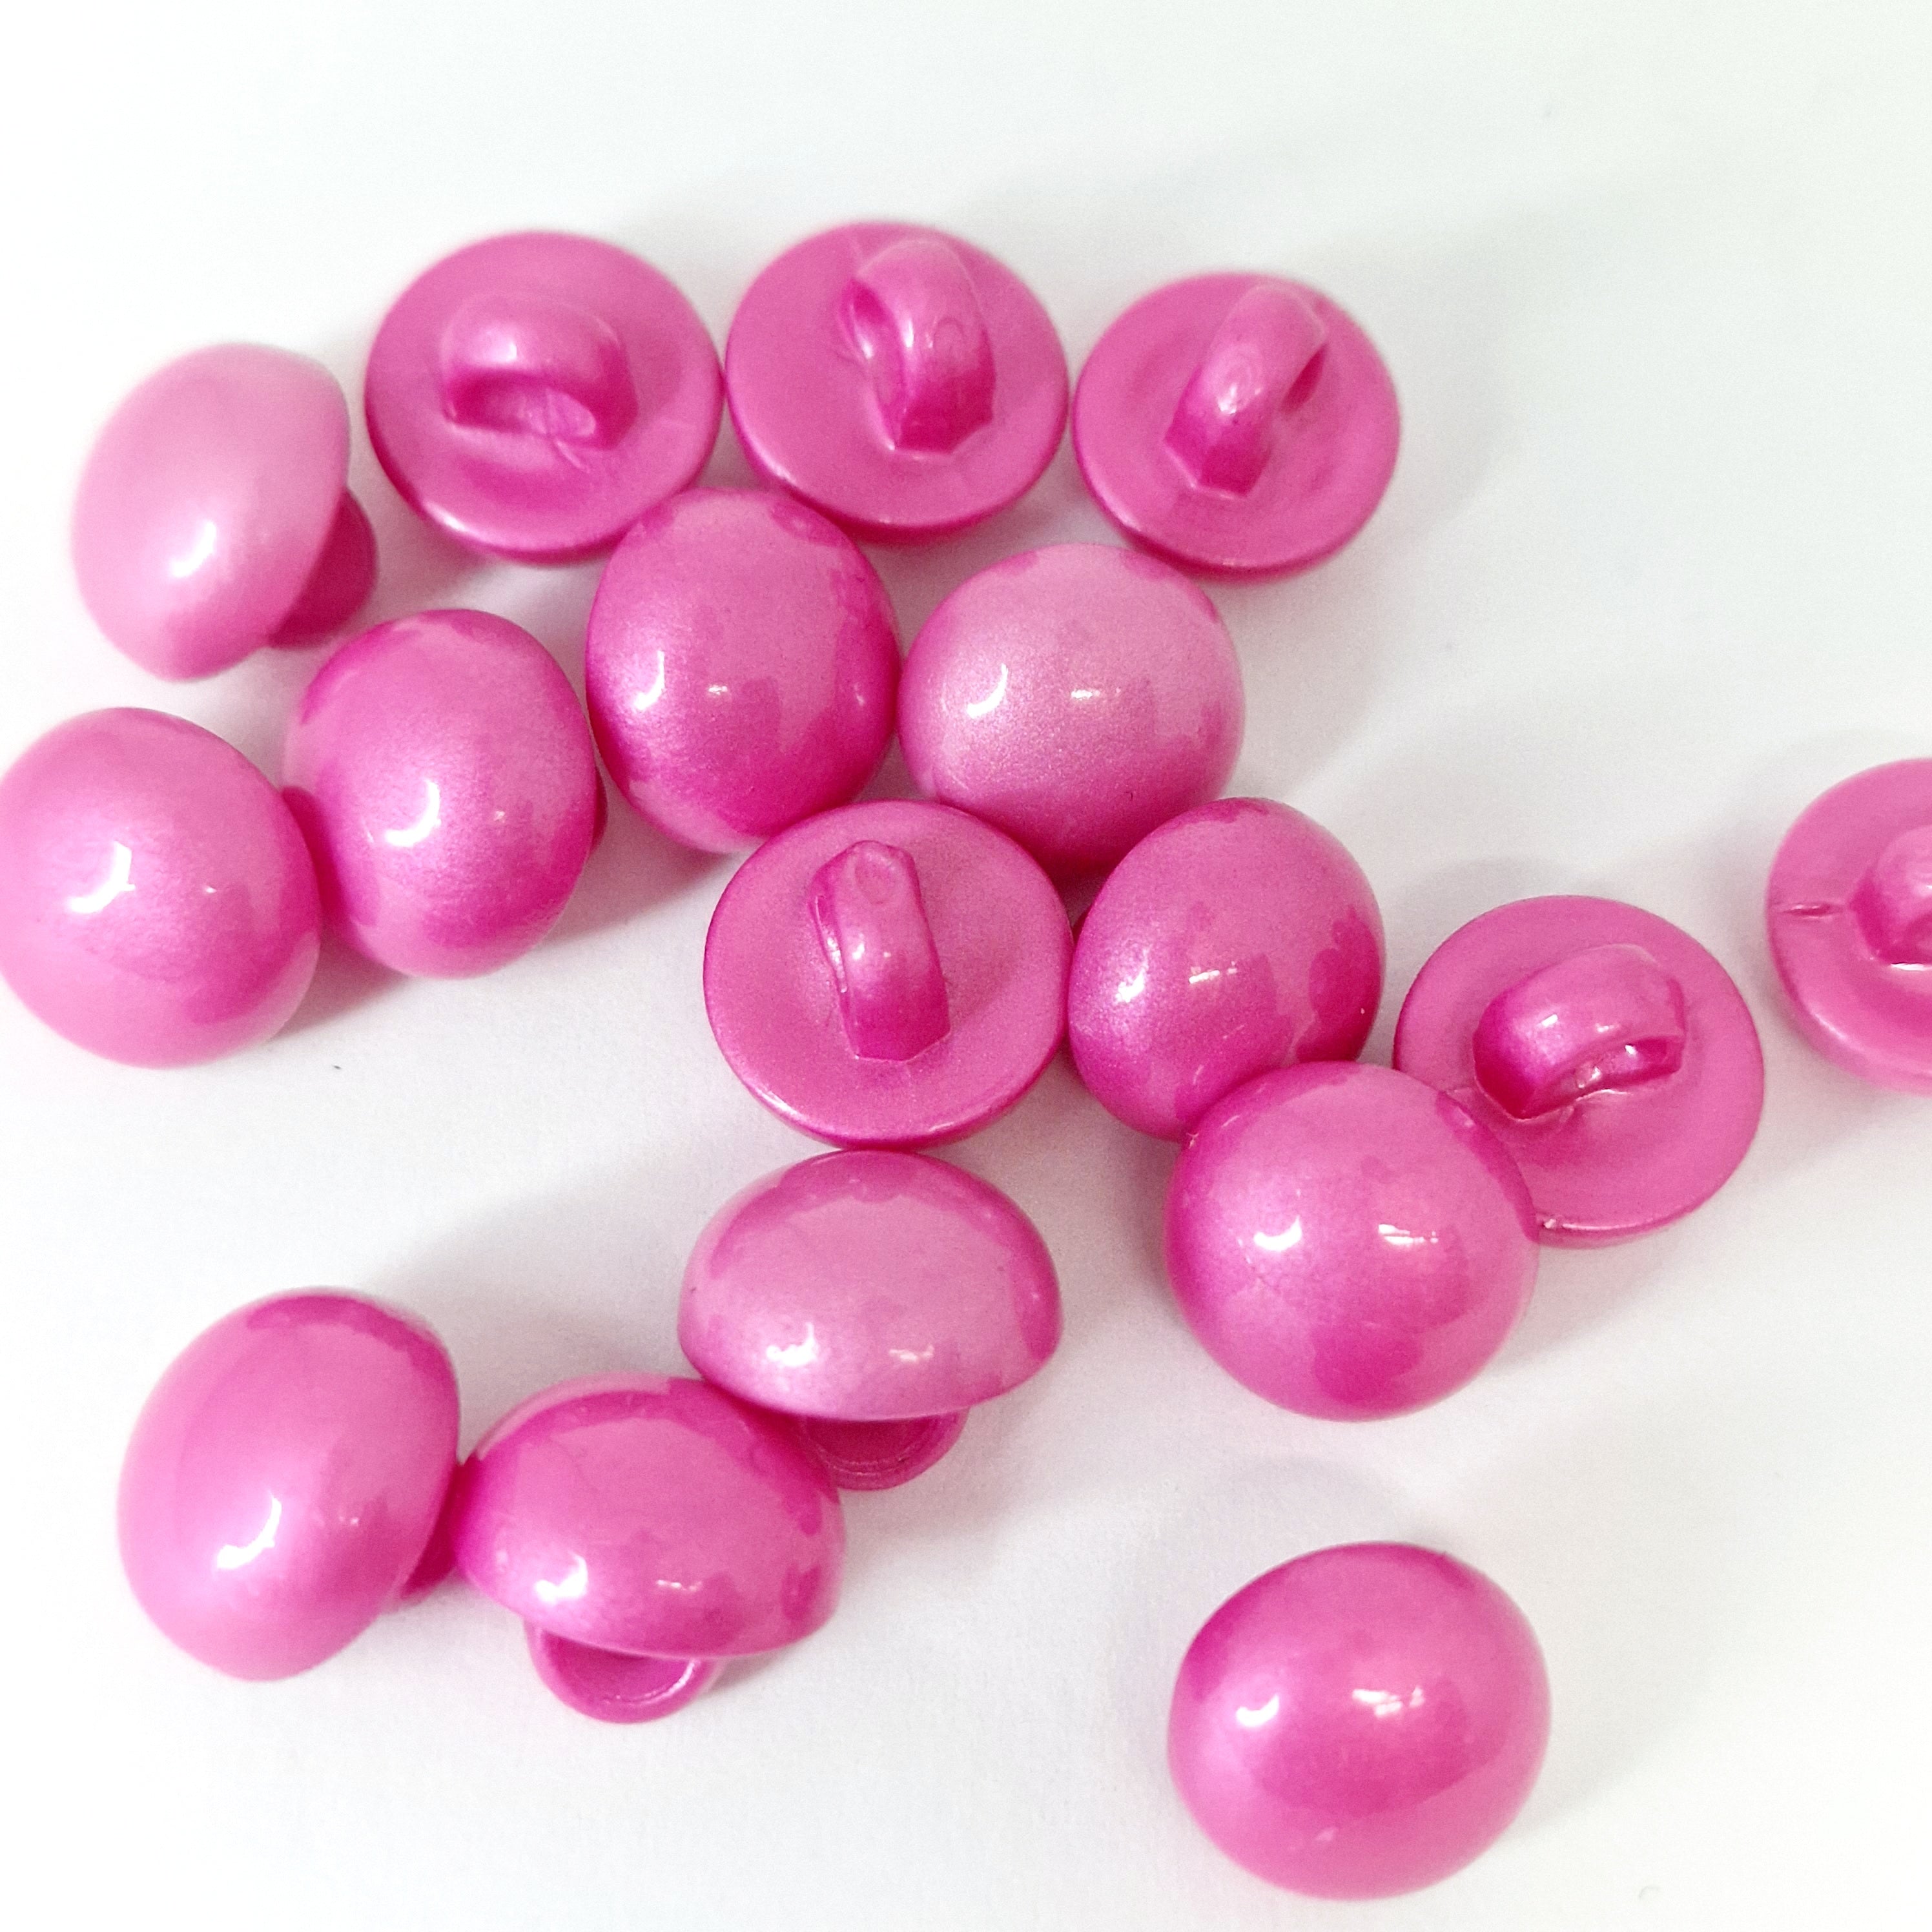 MajorCrafts 24pcs 11mm Dark Pink High-Grade Acrylic Small Round Sewing Mushroom Shank Buttons